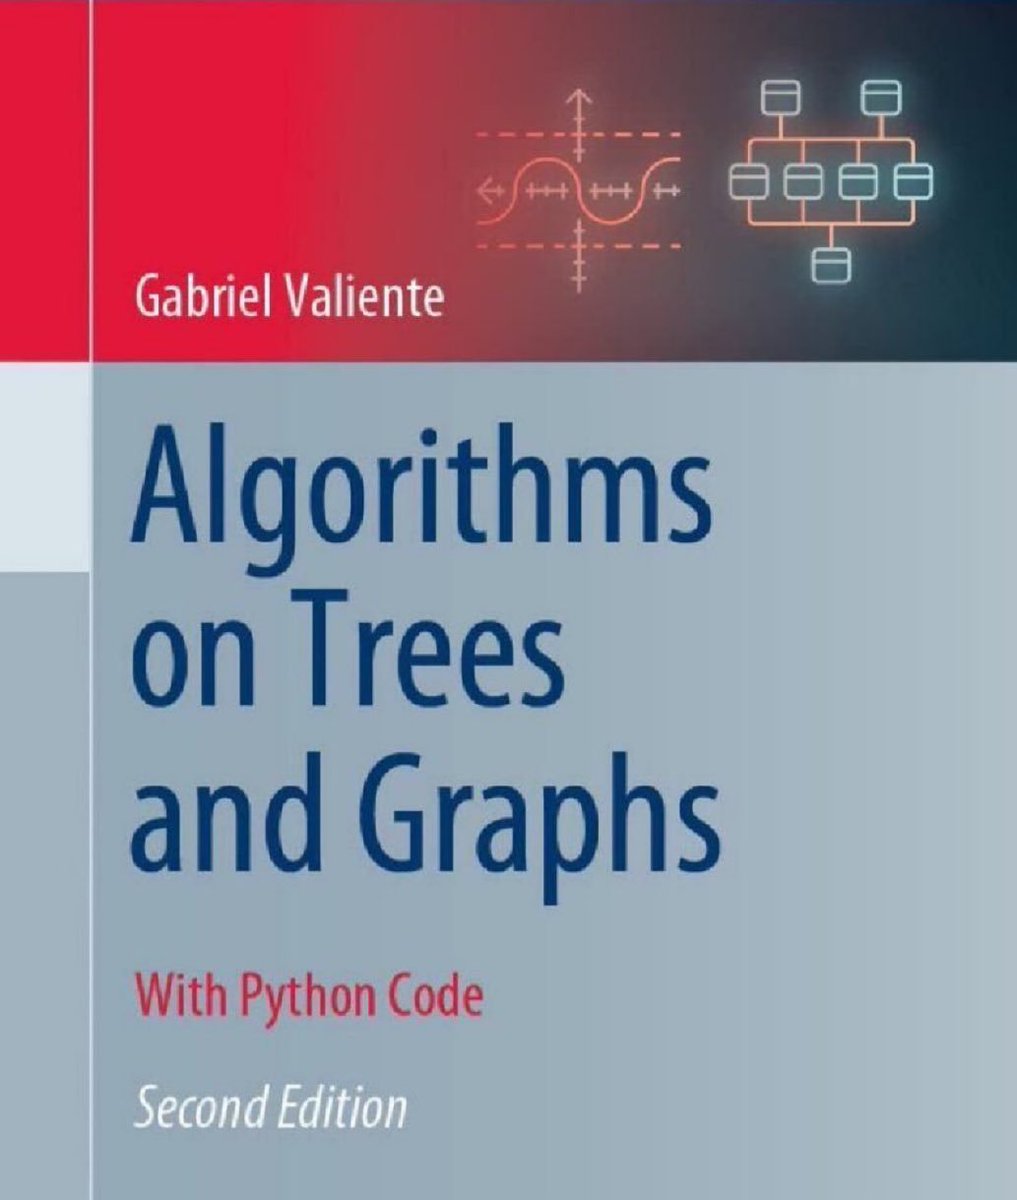 #Algorithms on Trees and Graphs (with #Python Code): amzn.to/3IrmKWs

——————
#AI #MachineLearning #BigData #DataScience #RDF #LinkedData #GraphDB #GraphAnalytics #Semantics #KnowledgeGraphs #RAG #LLMs #DataStructures #DataScientists #Coding